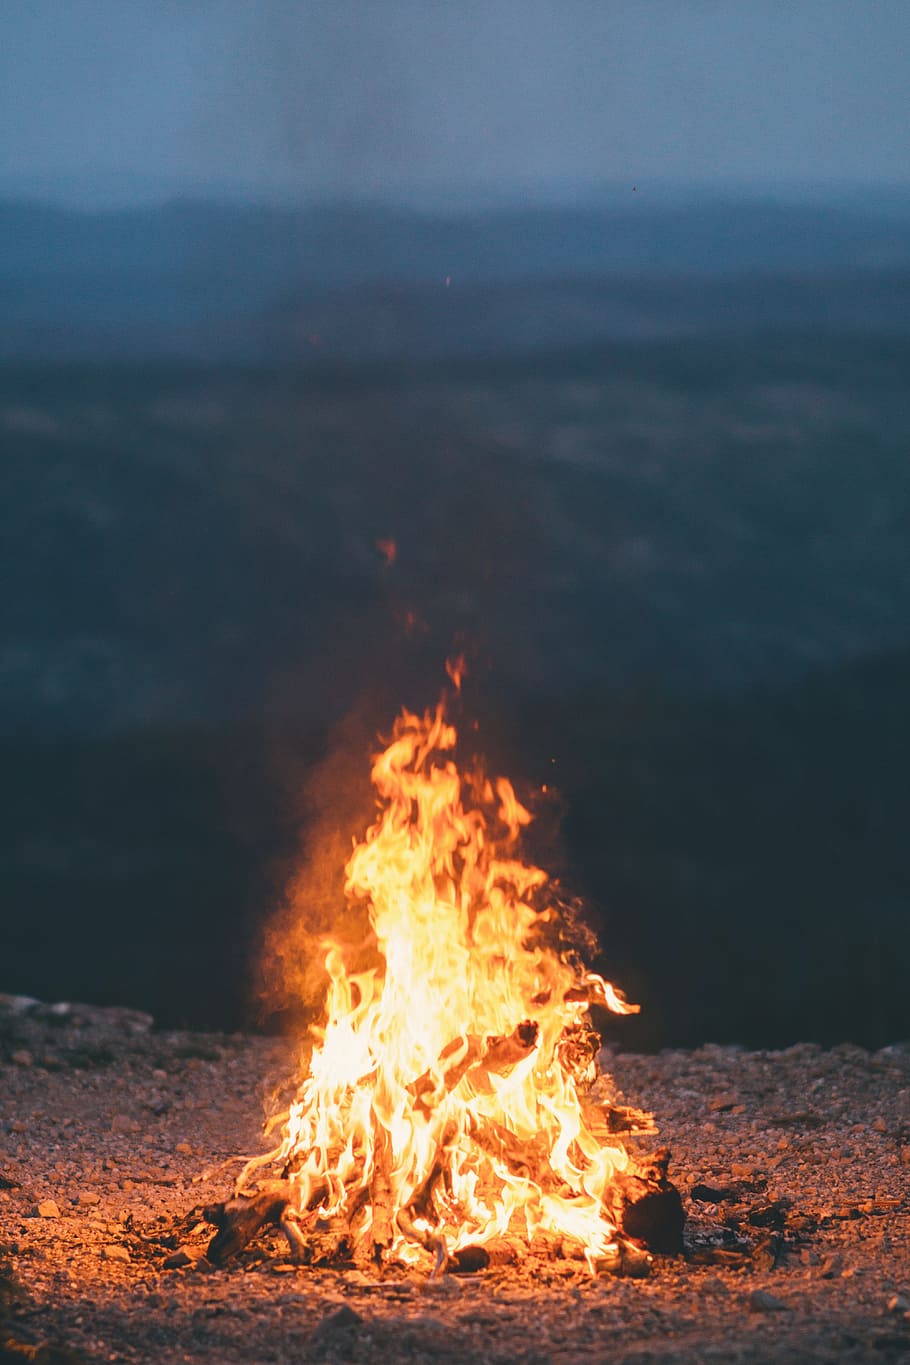 bonfire during nighttime, fire, flame, burn, bonfire, campfire, dark, night, camping, light